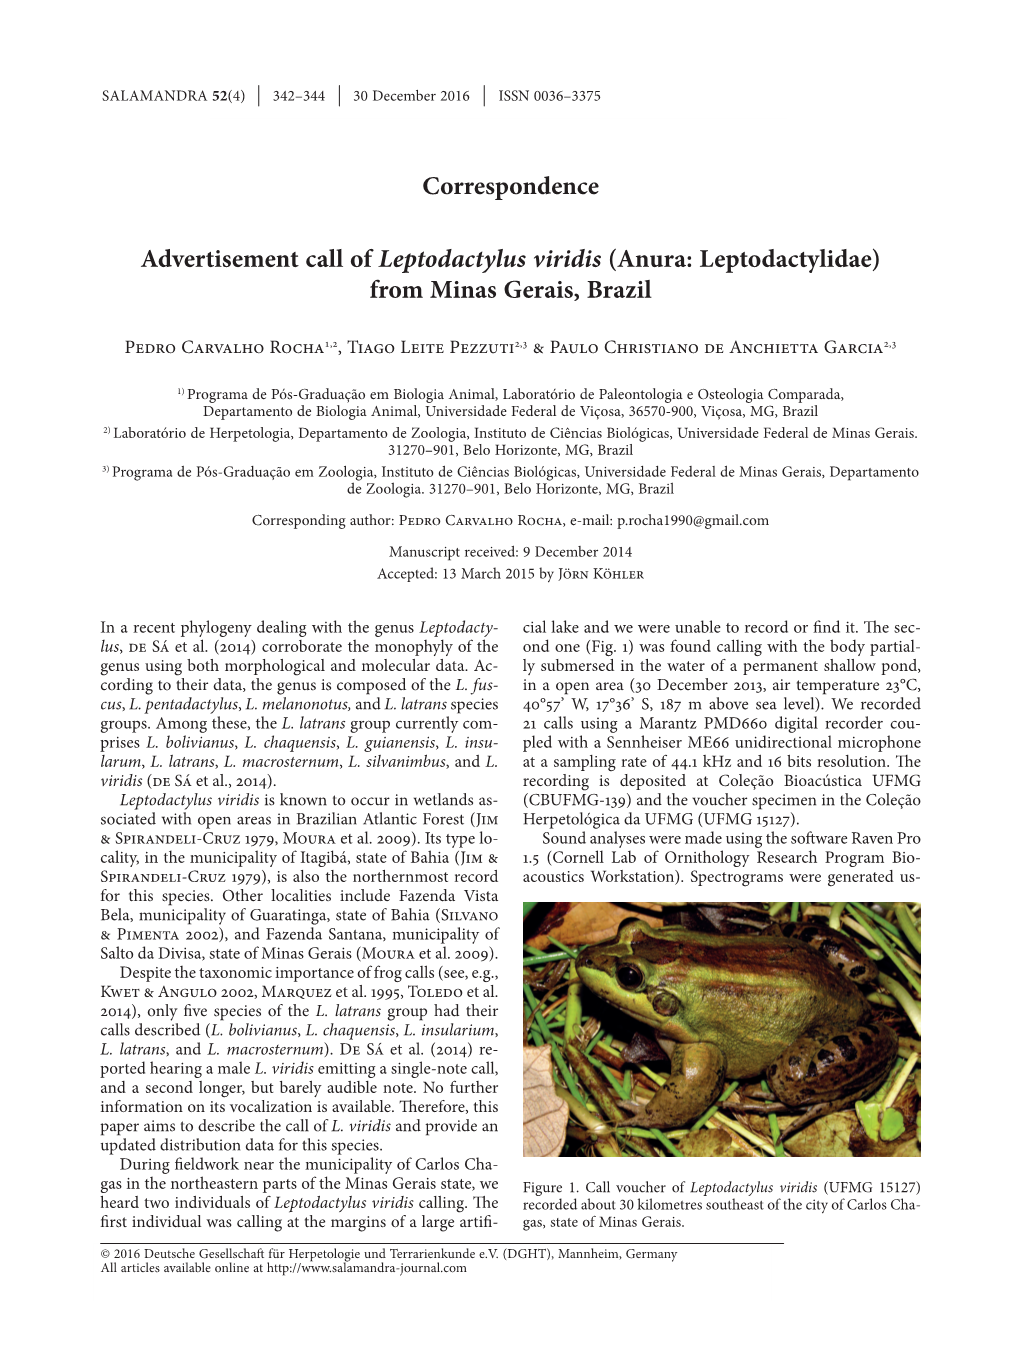 Advertisement Call of Leptodactylus Viridis (Anura: Leptodactylidae) from Minas Gerais, Brazil